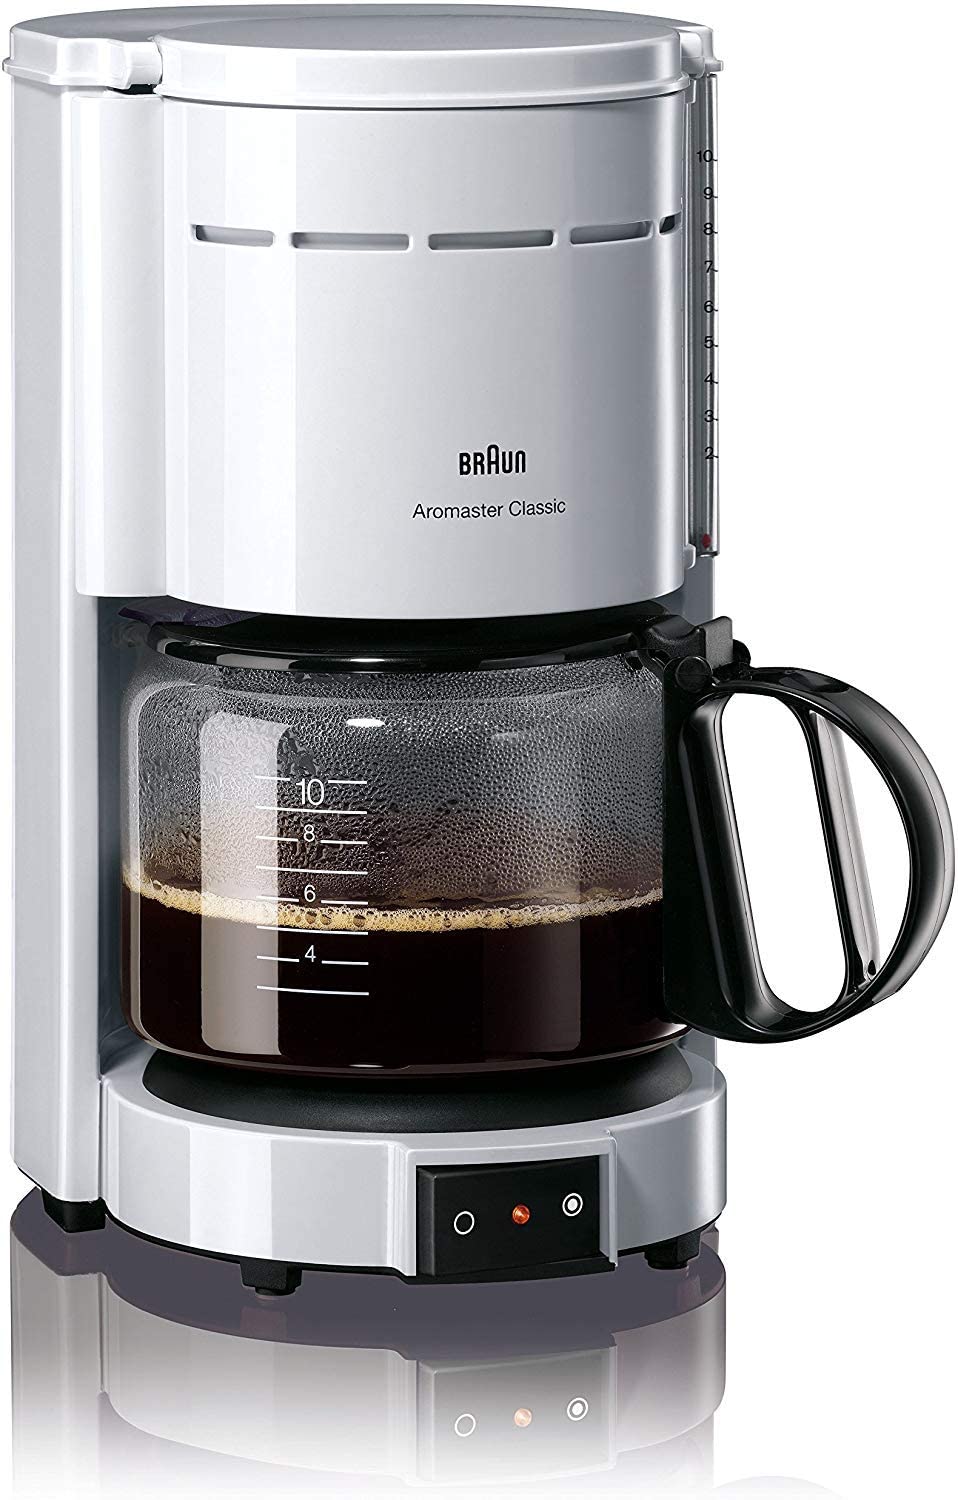 Braun Aromaster KF 47 coffee machine